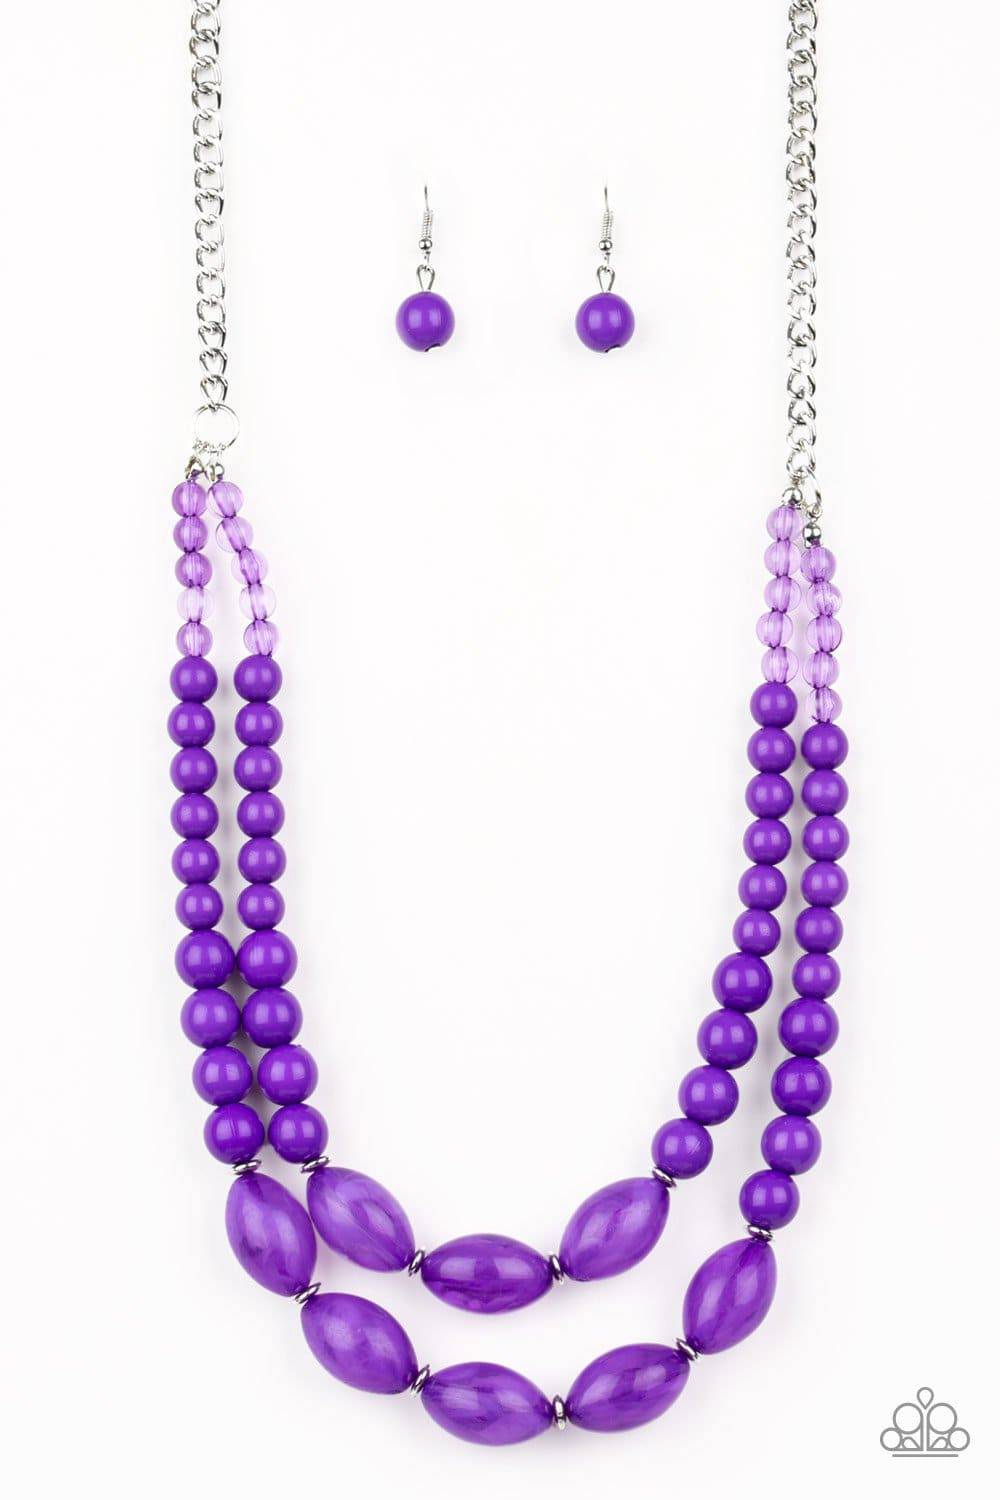 Sundae Shoppe - Purple Bead Necklace - Paparazzi Accessories - GlaMarous Titi Jewels